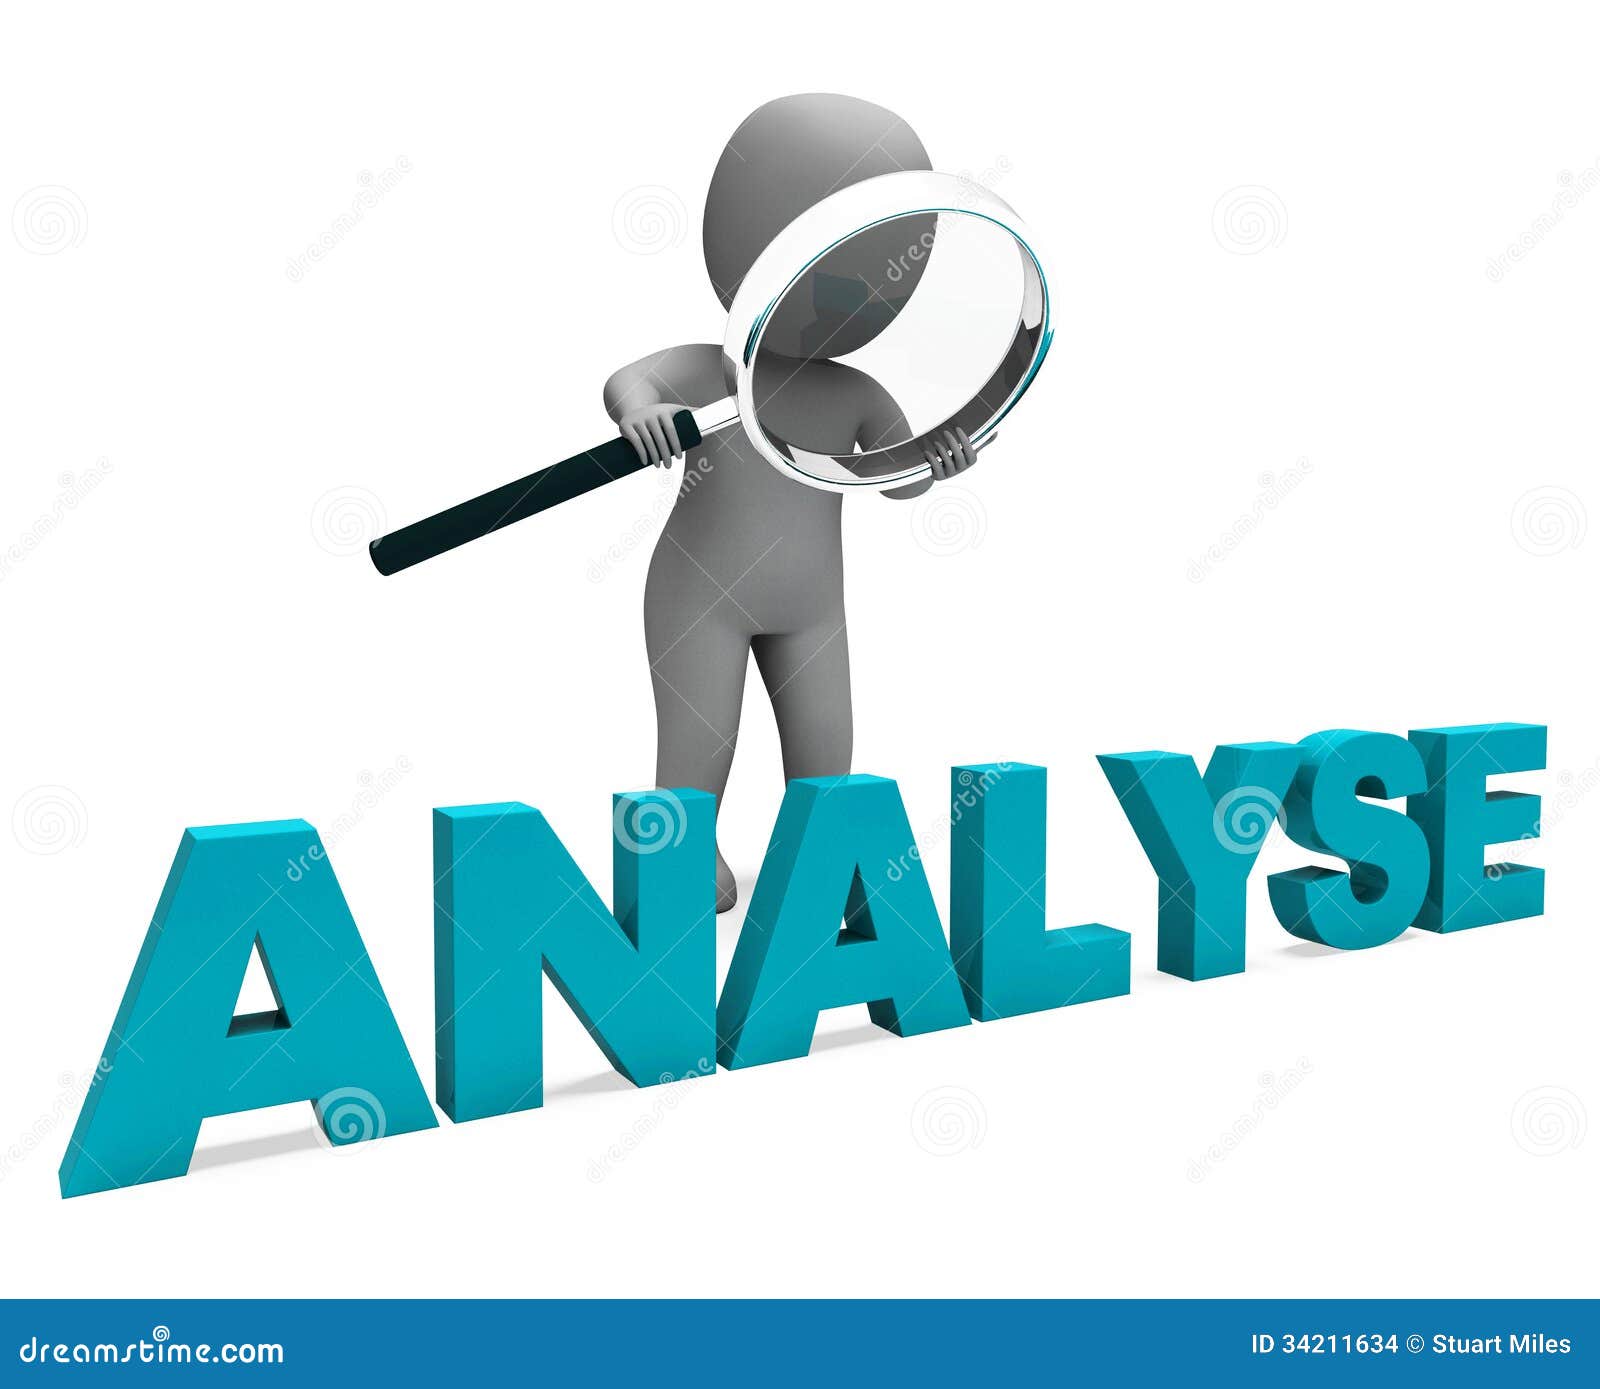 analyse-character-shows-investigation-analysis-analyzing-34211634.jpg